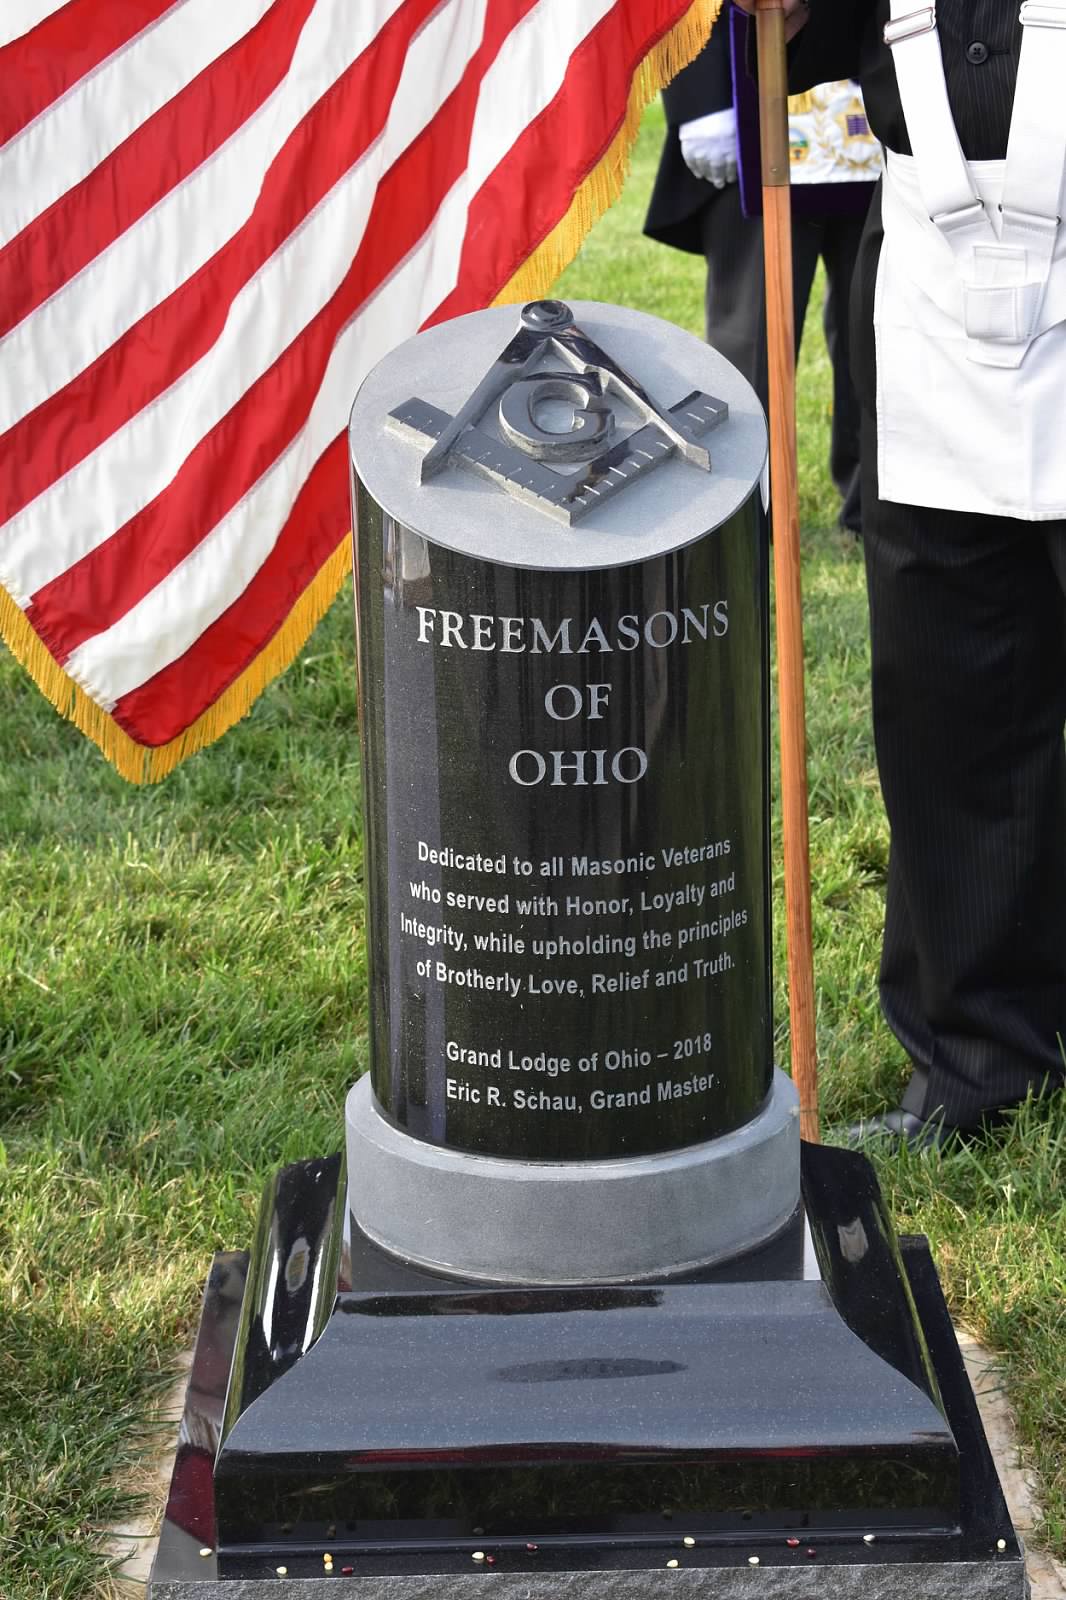 Freemasons of Ohio dedication statue